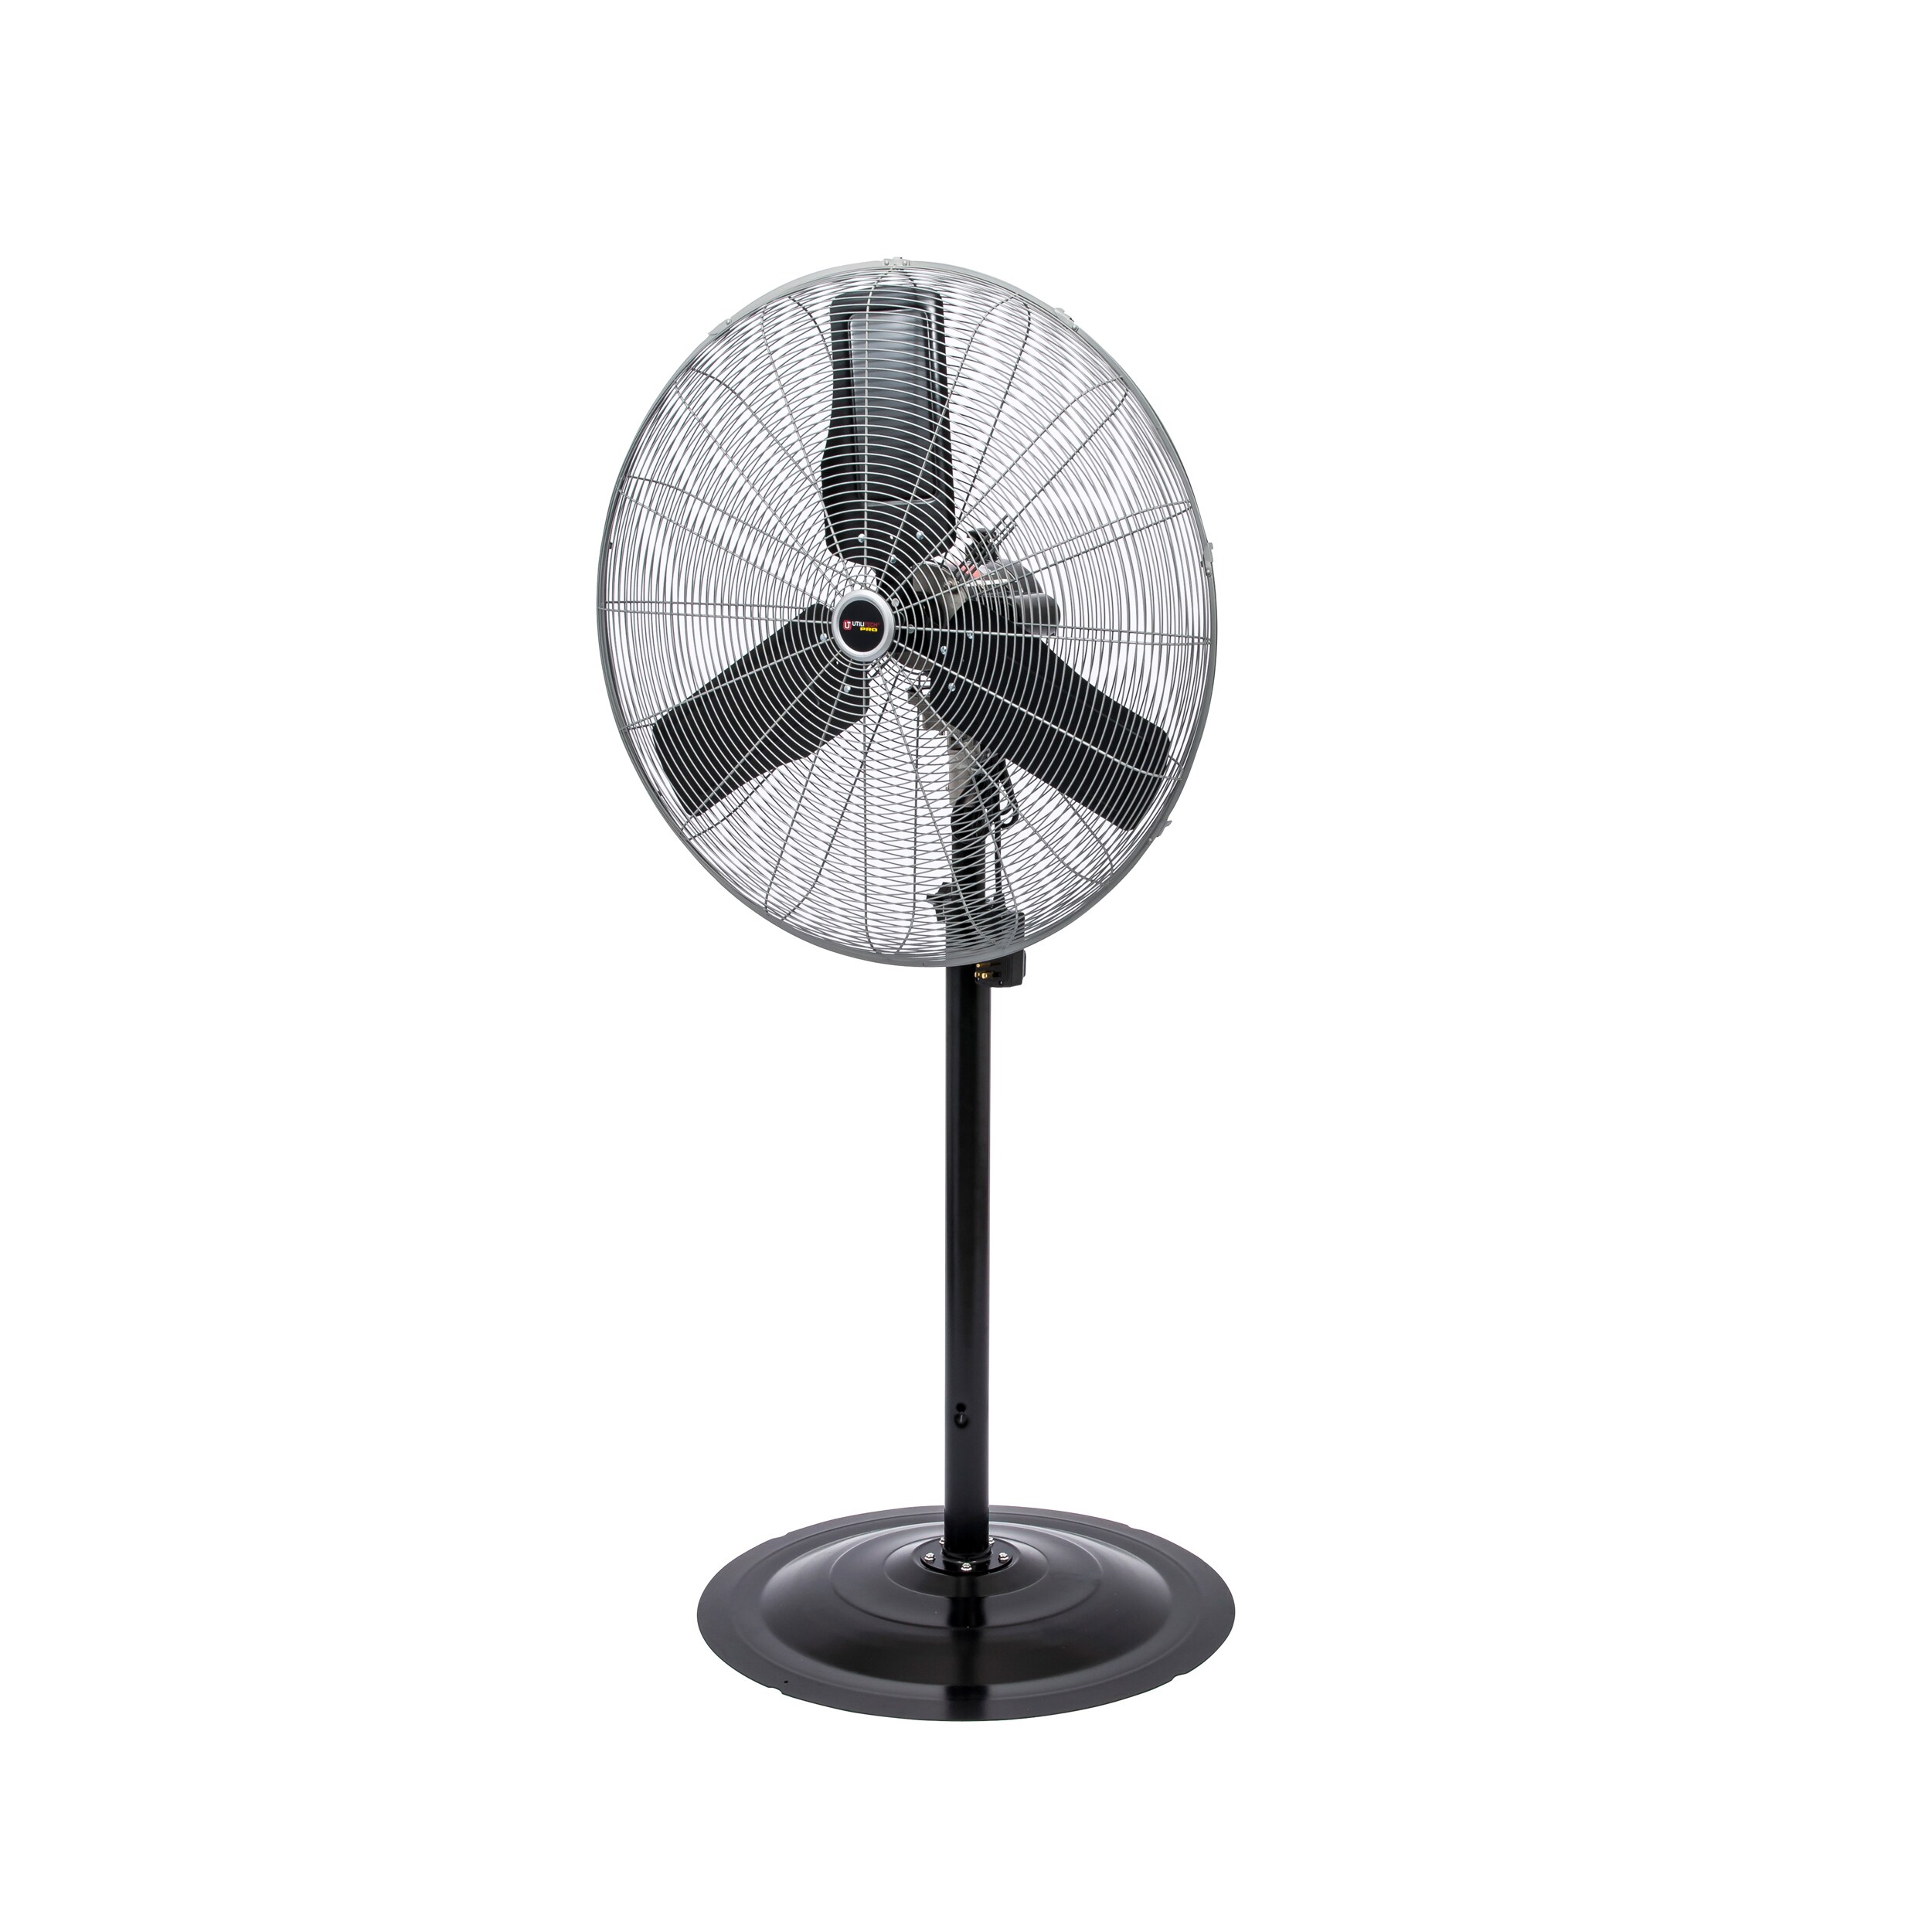 Electrical 16-Inch Oscillating Pedestal Stand Fan,Black Black 1 year warranty, 